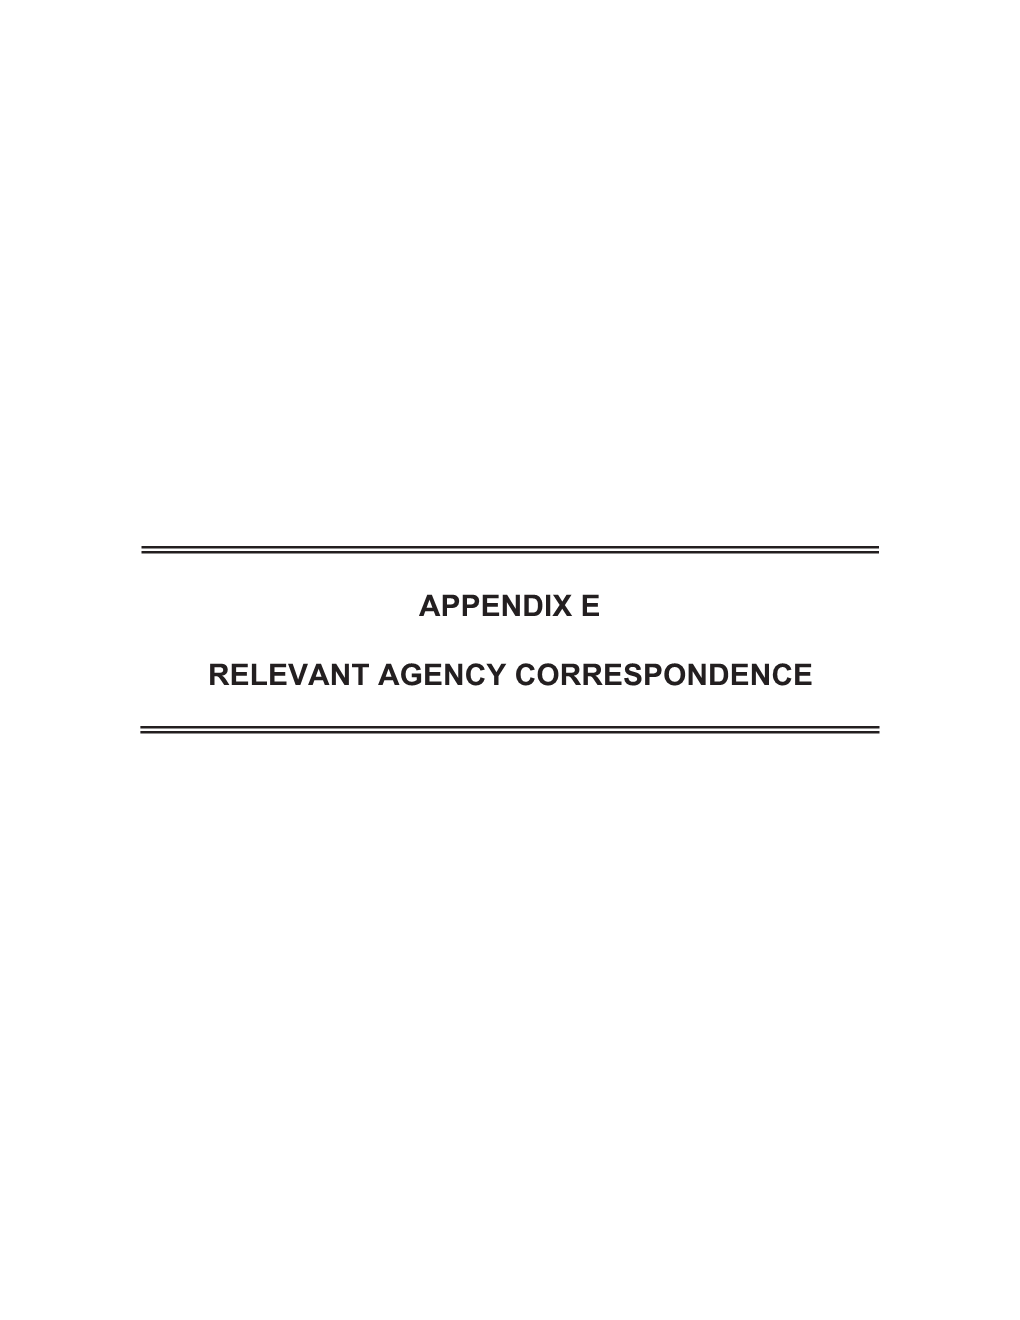 Appendix E Relevant Agency Correspondence